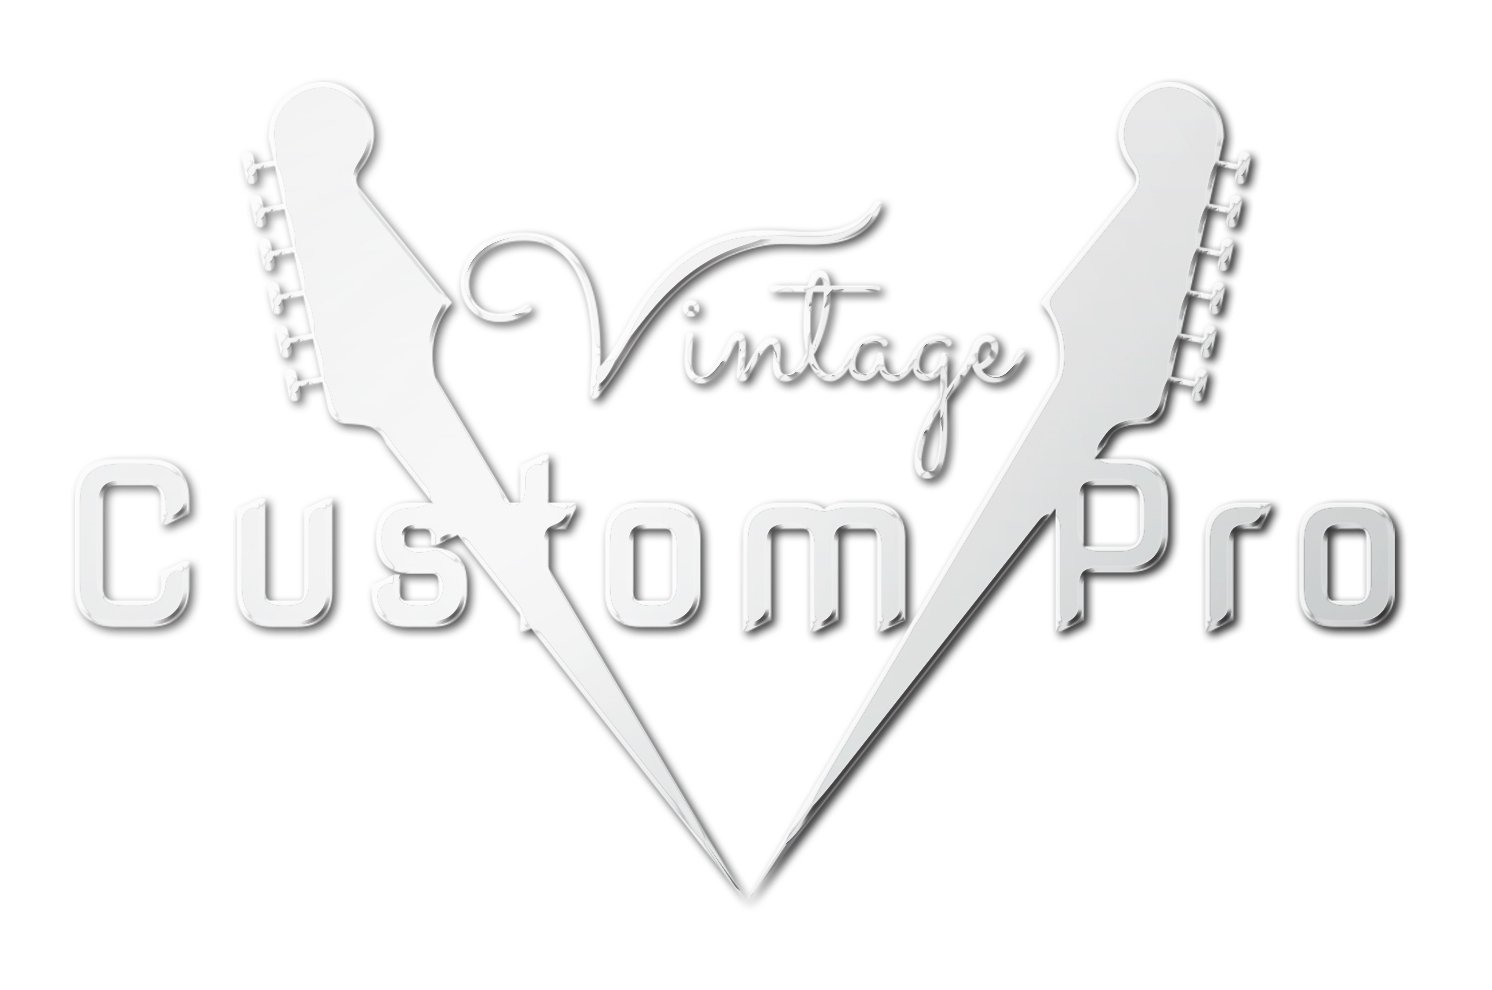 Vintage* V120GHB Electric Guitar, Electric Guitar for sale at Richards Guitars.